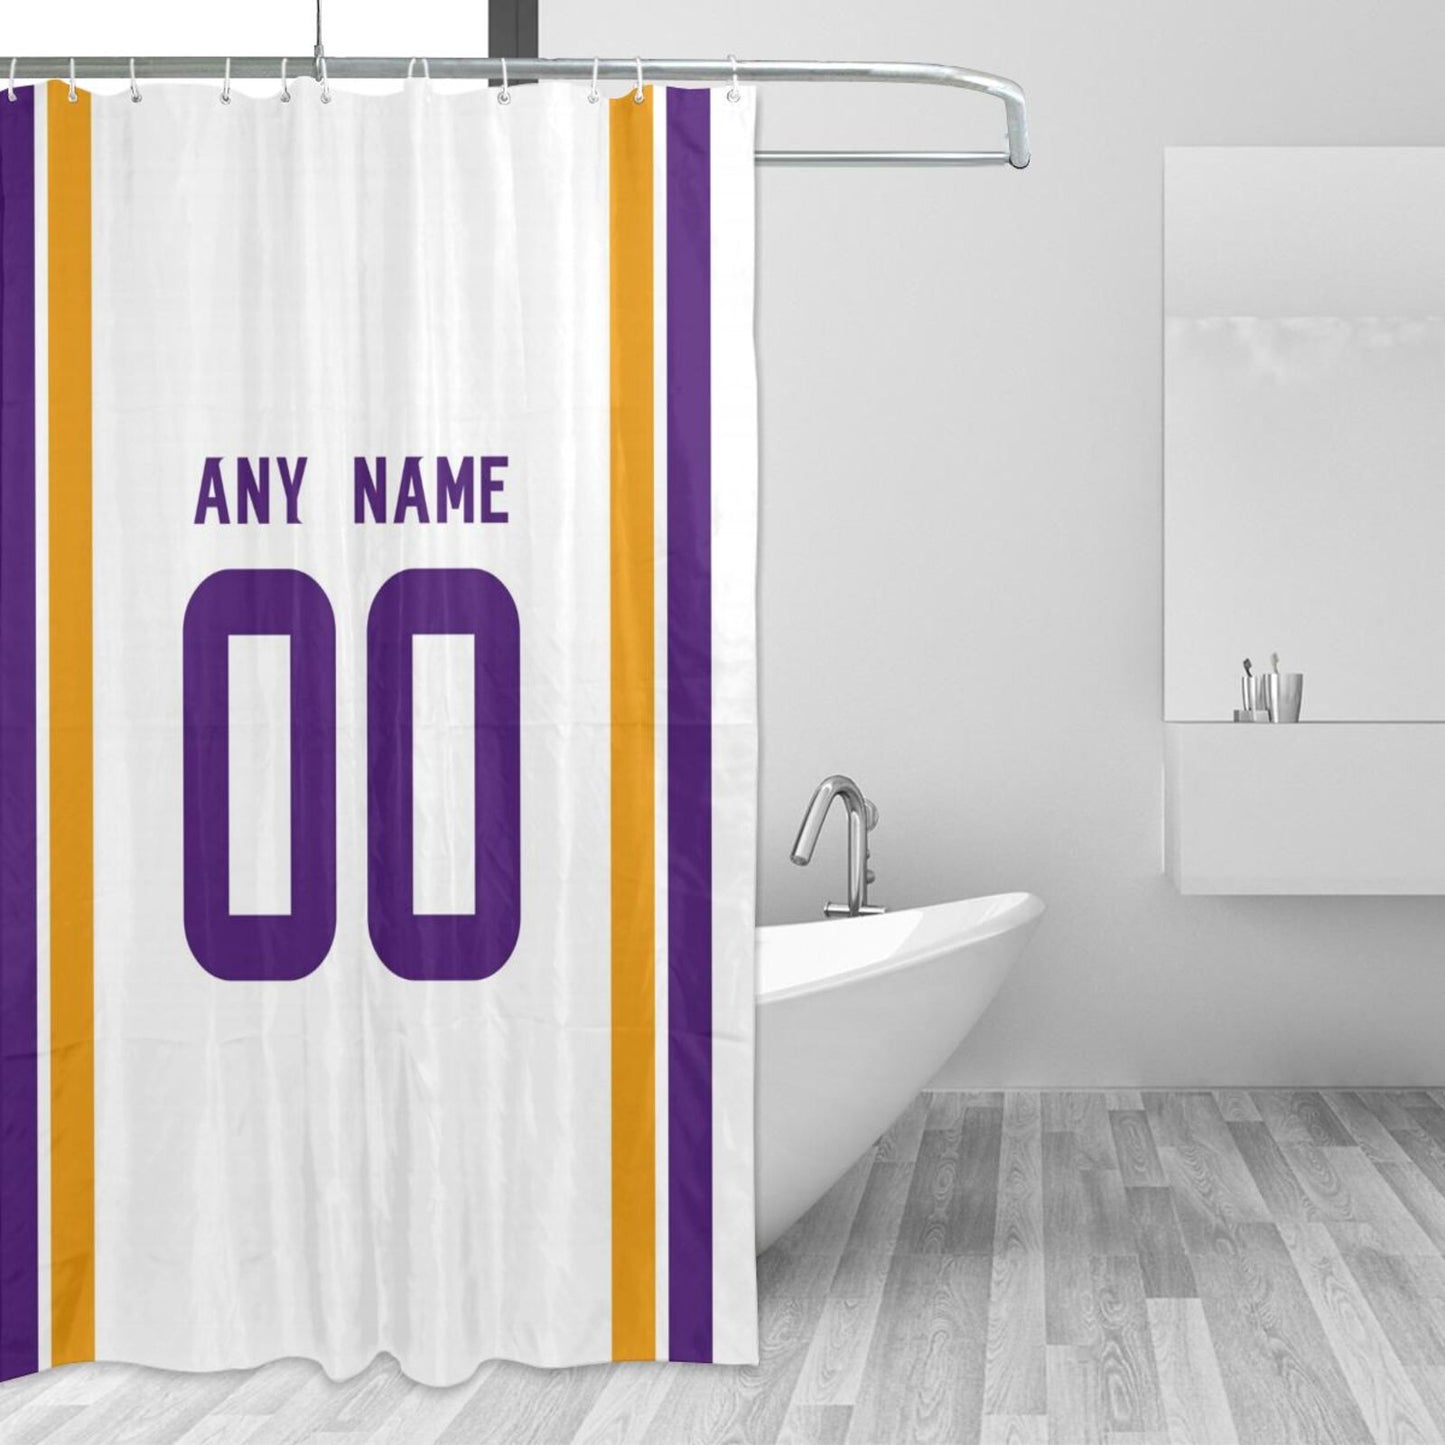 Custom Football Minnesota Vikings style personalized shower curtain custom design name and number set of 12 shower curtain hooks Rings